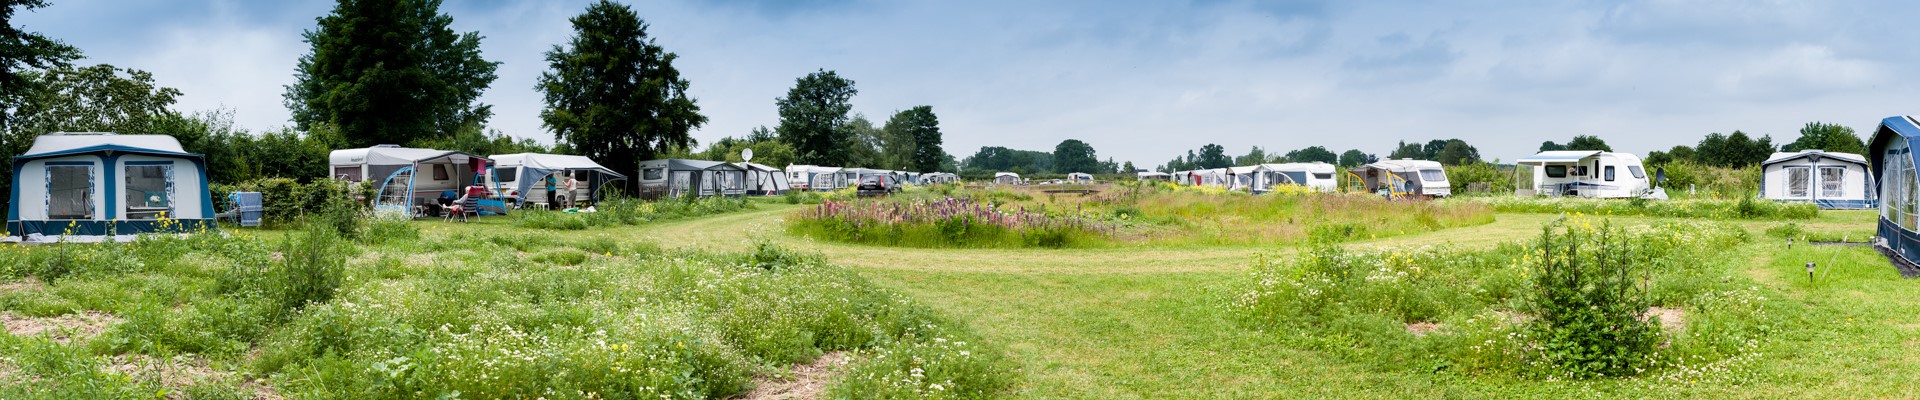 Camping De Kikker Hall bloemenveld